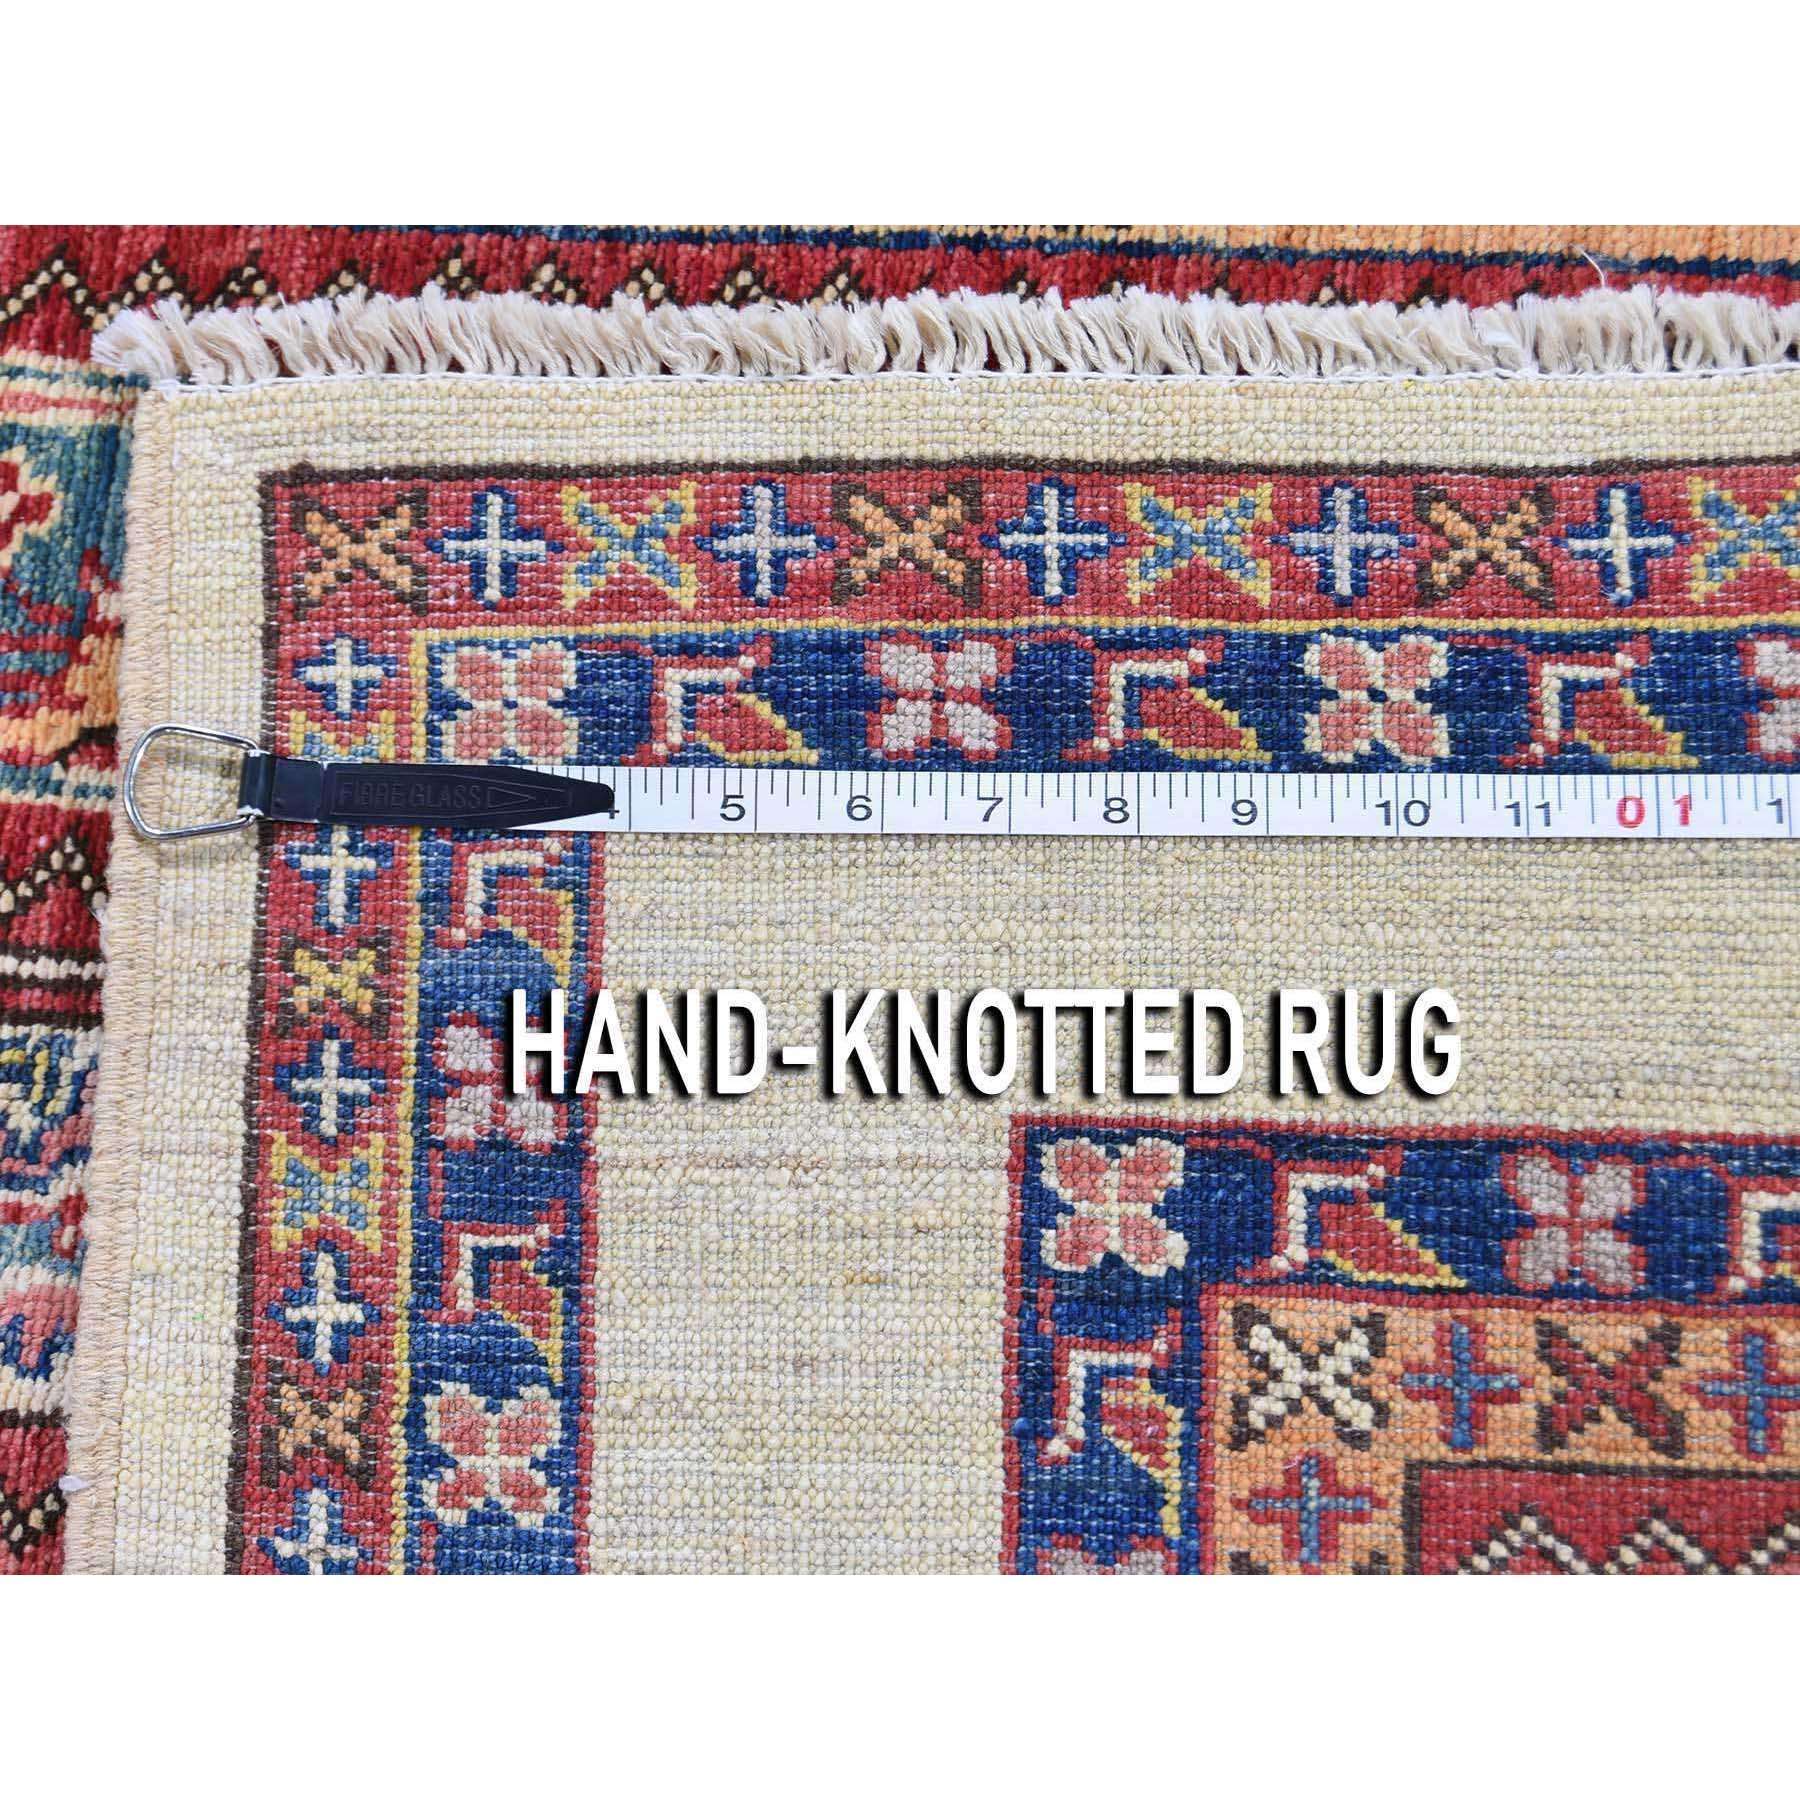 4-9 x6-8  Multicolored Super Kazak Shawl Design Pure Wool Hand-Knotted Oriental Rug 